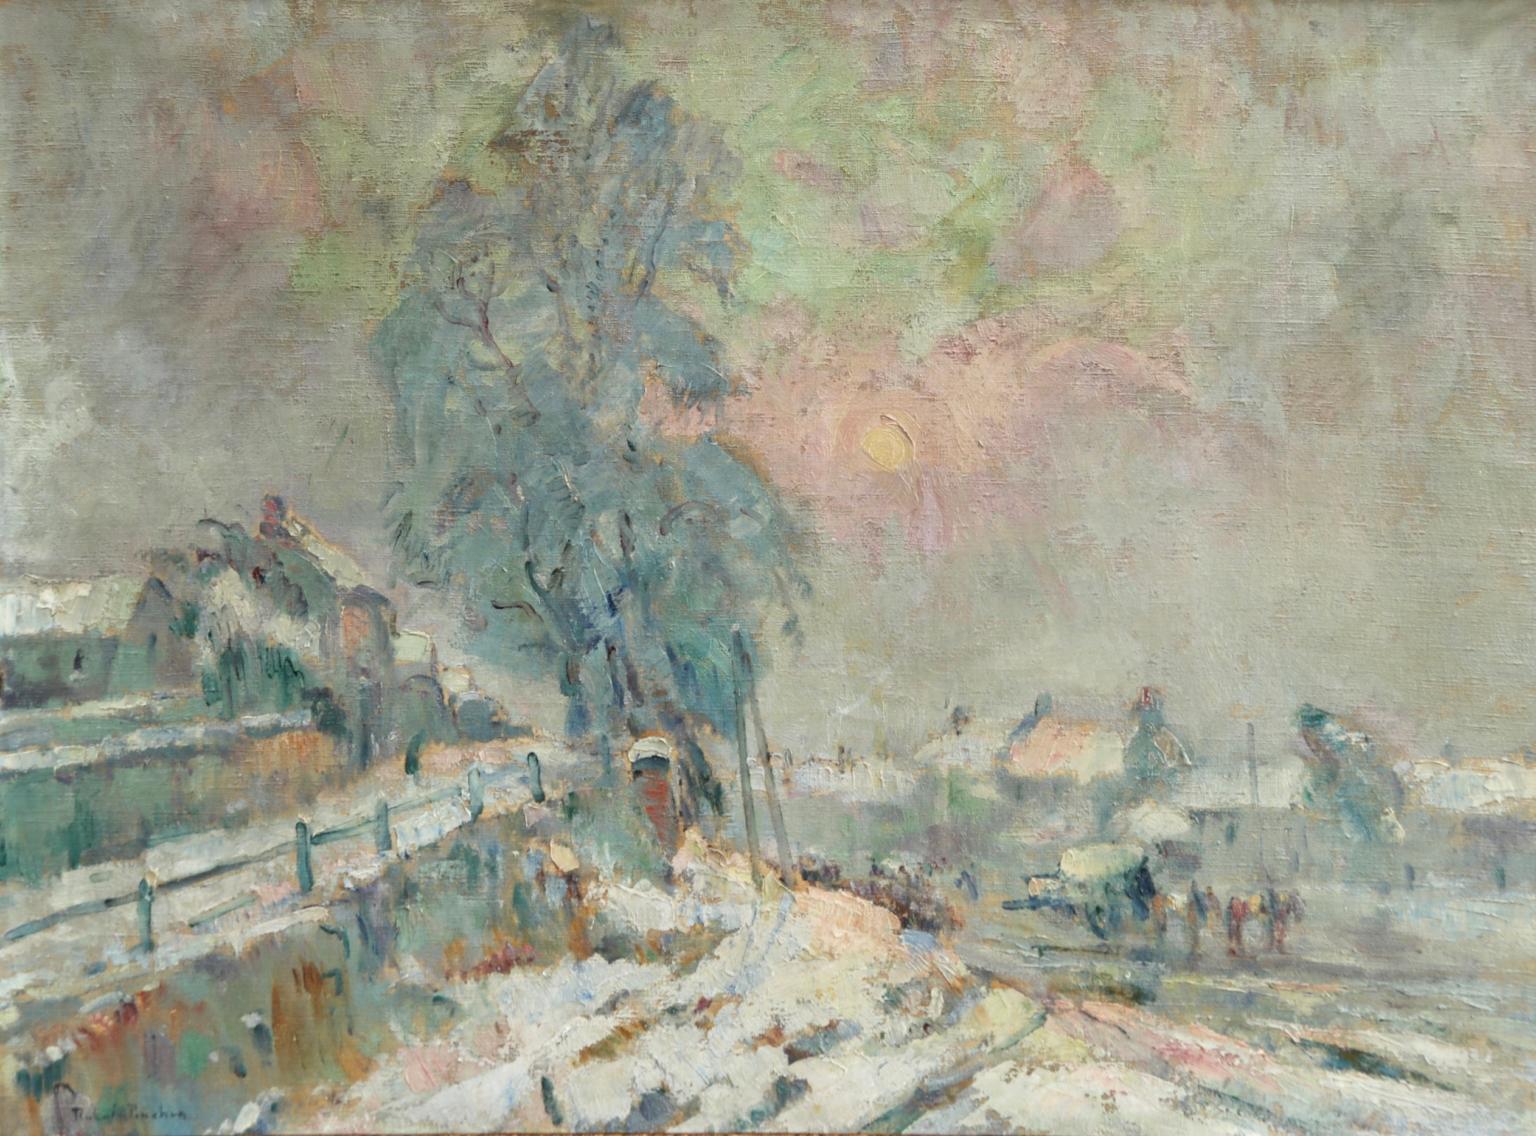 Robert Antoine Pinchon Figurative Painting - Near Rouen - 19th Century Impressionist Oil, Snowy Landscape by Robert Pinchon